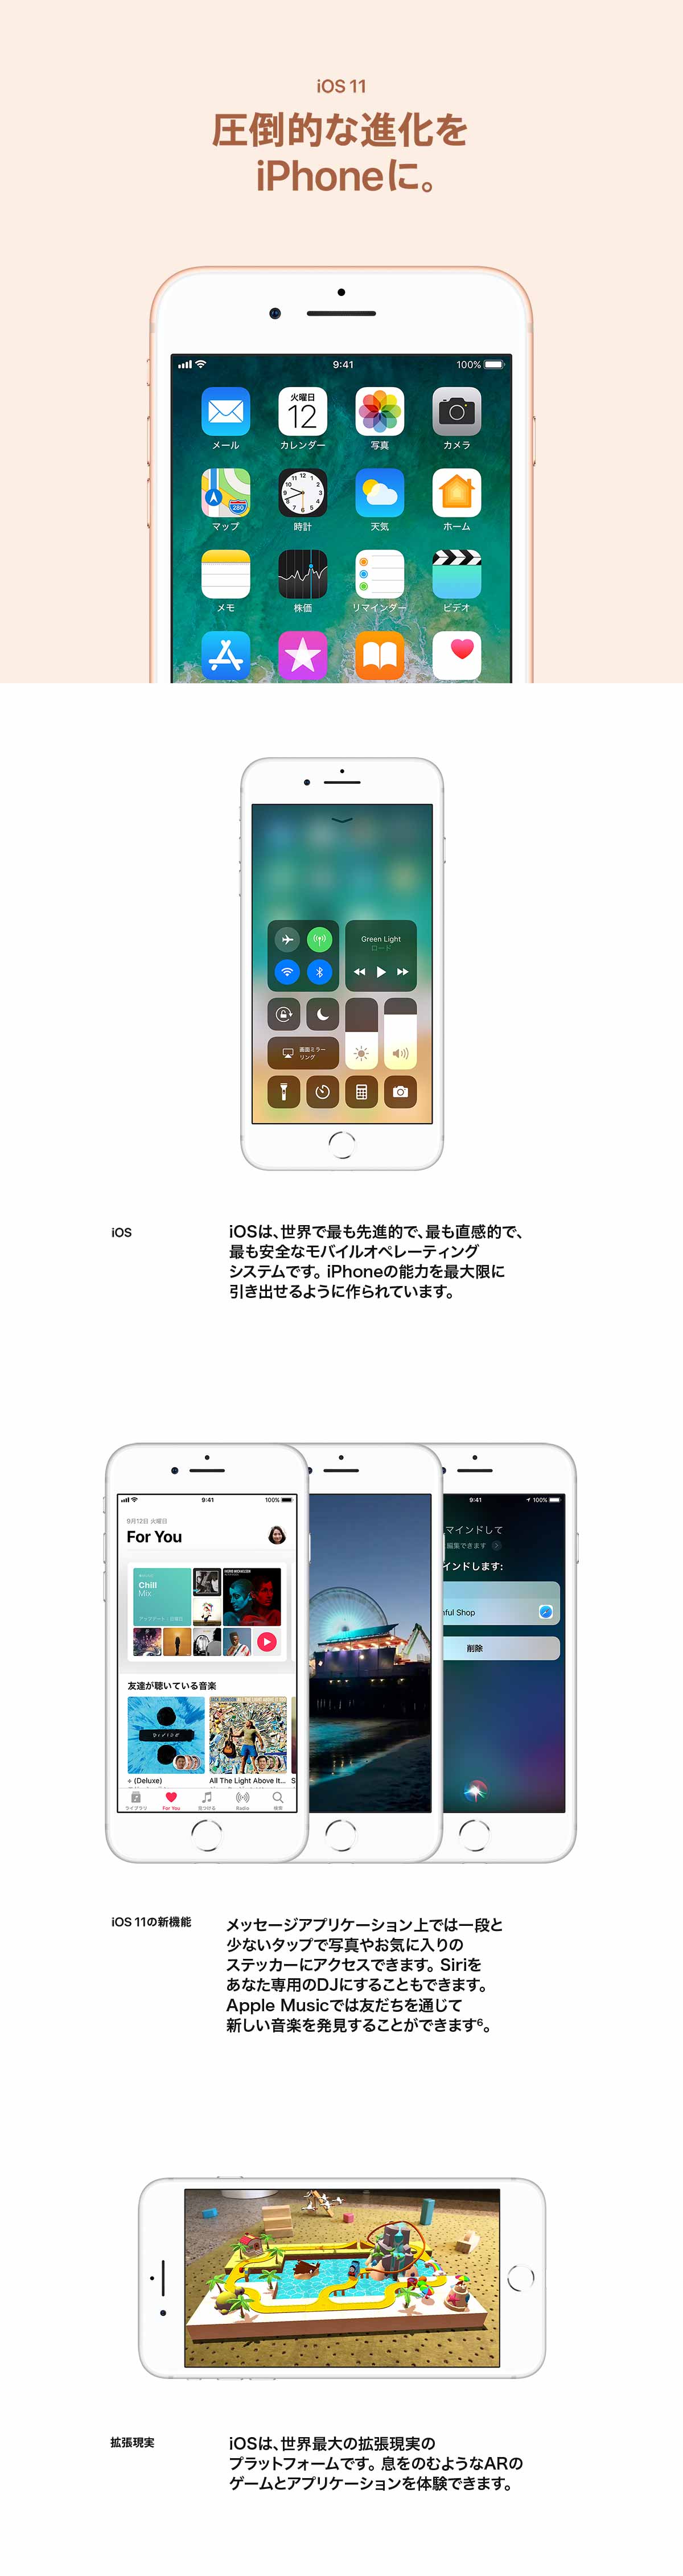 iOS11 |IȐiiPhoneɁB